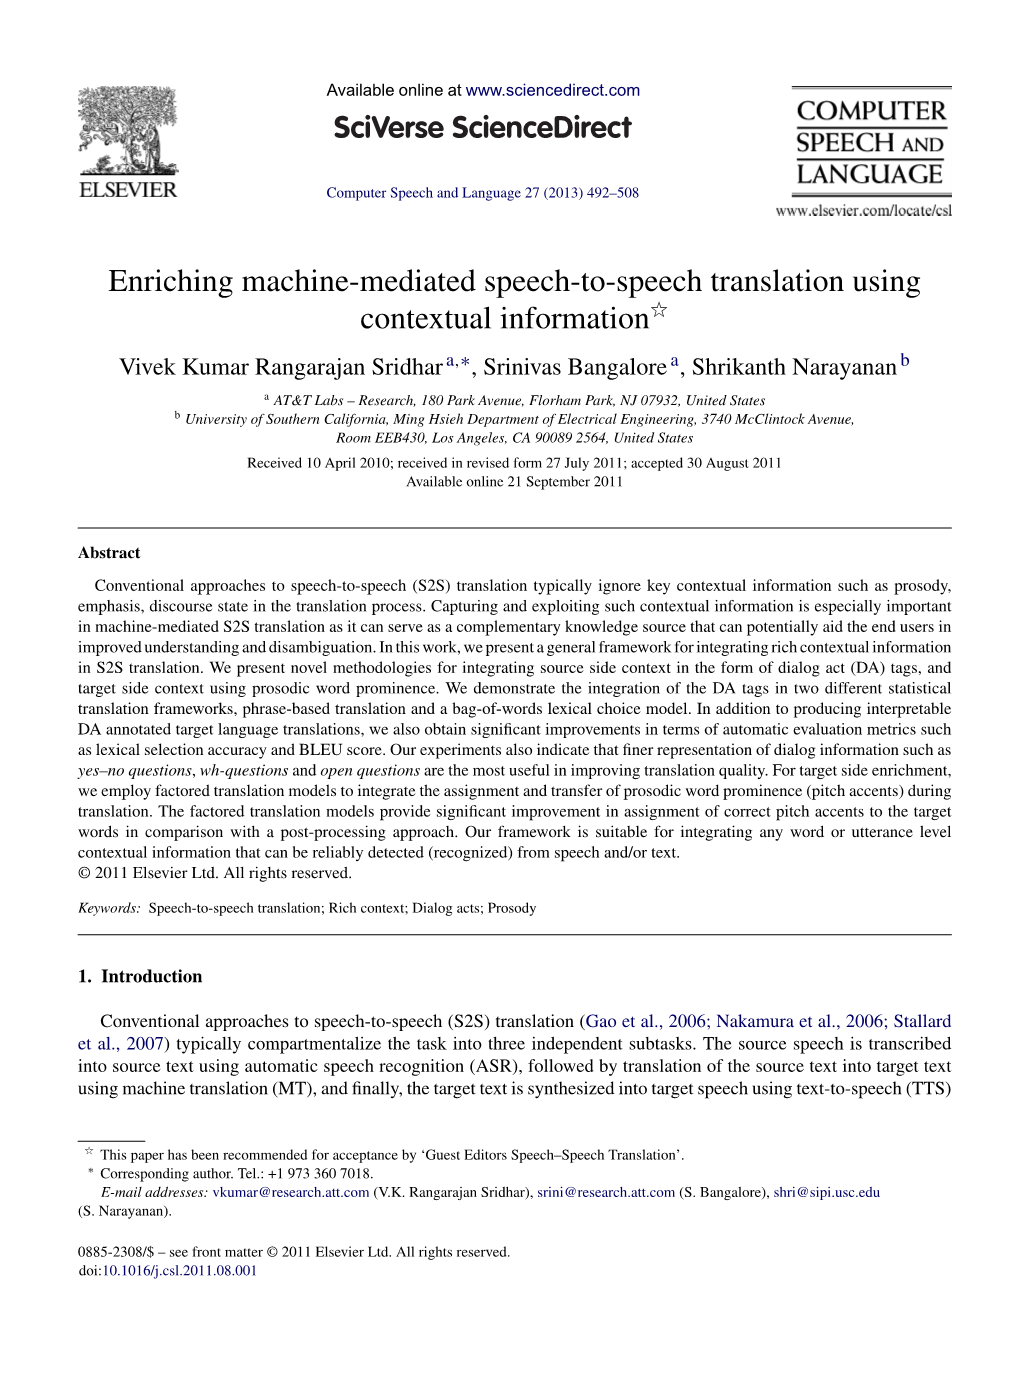 Enriching Machine-Mediated Speech-To-Speech Translation Using